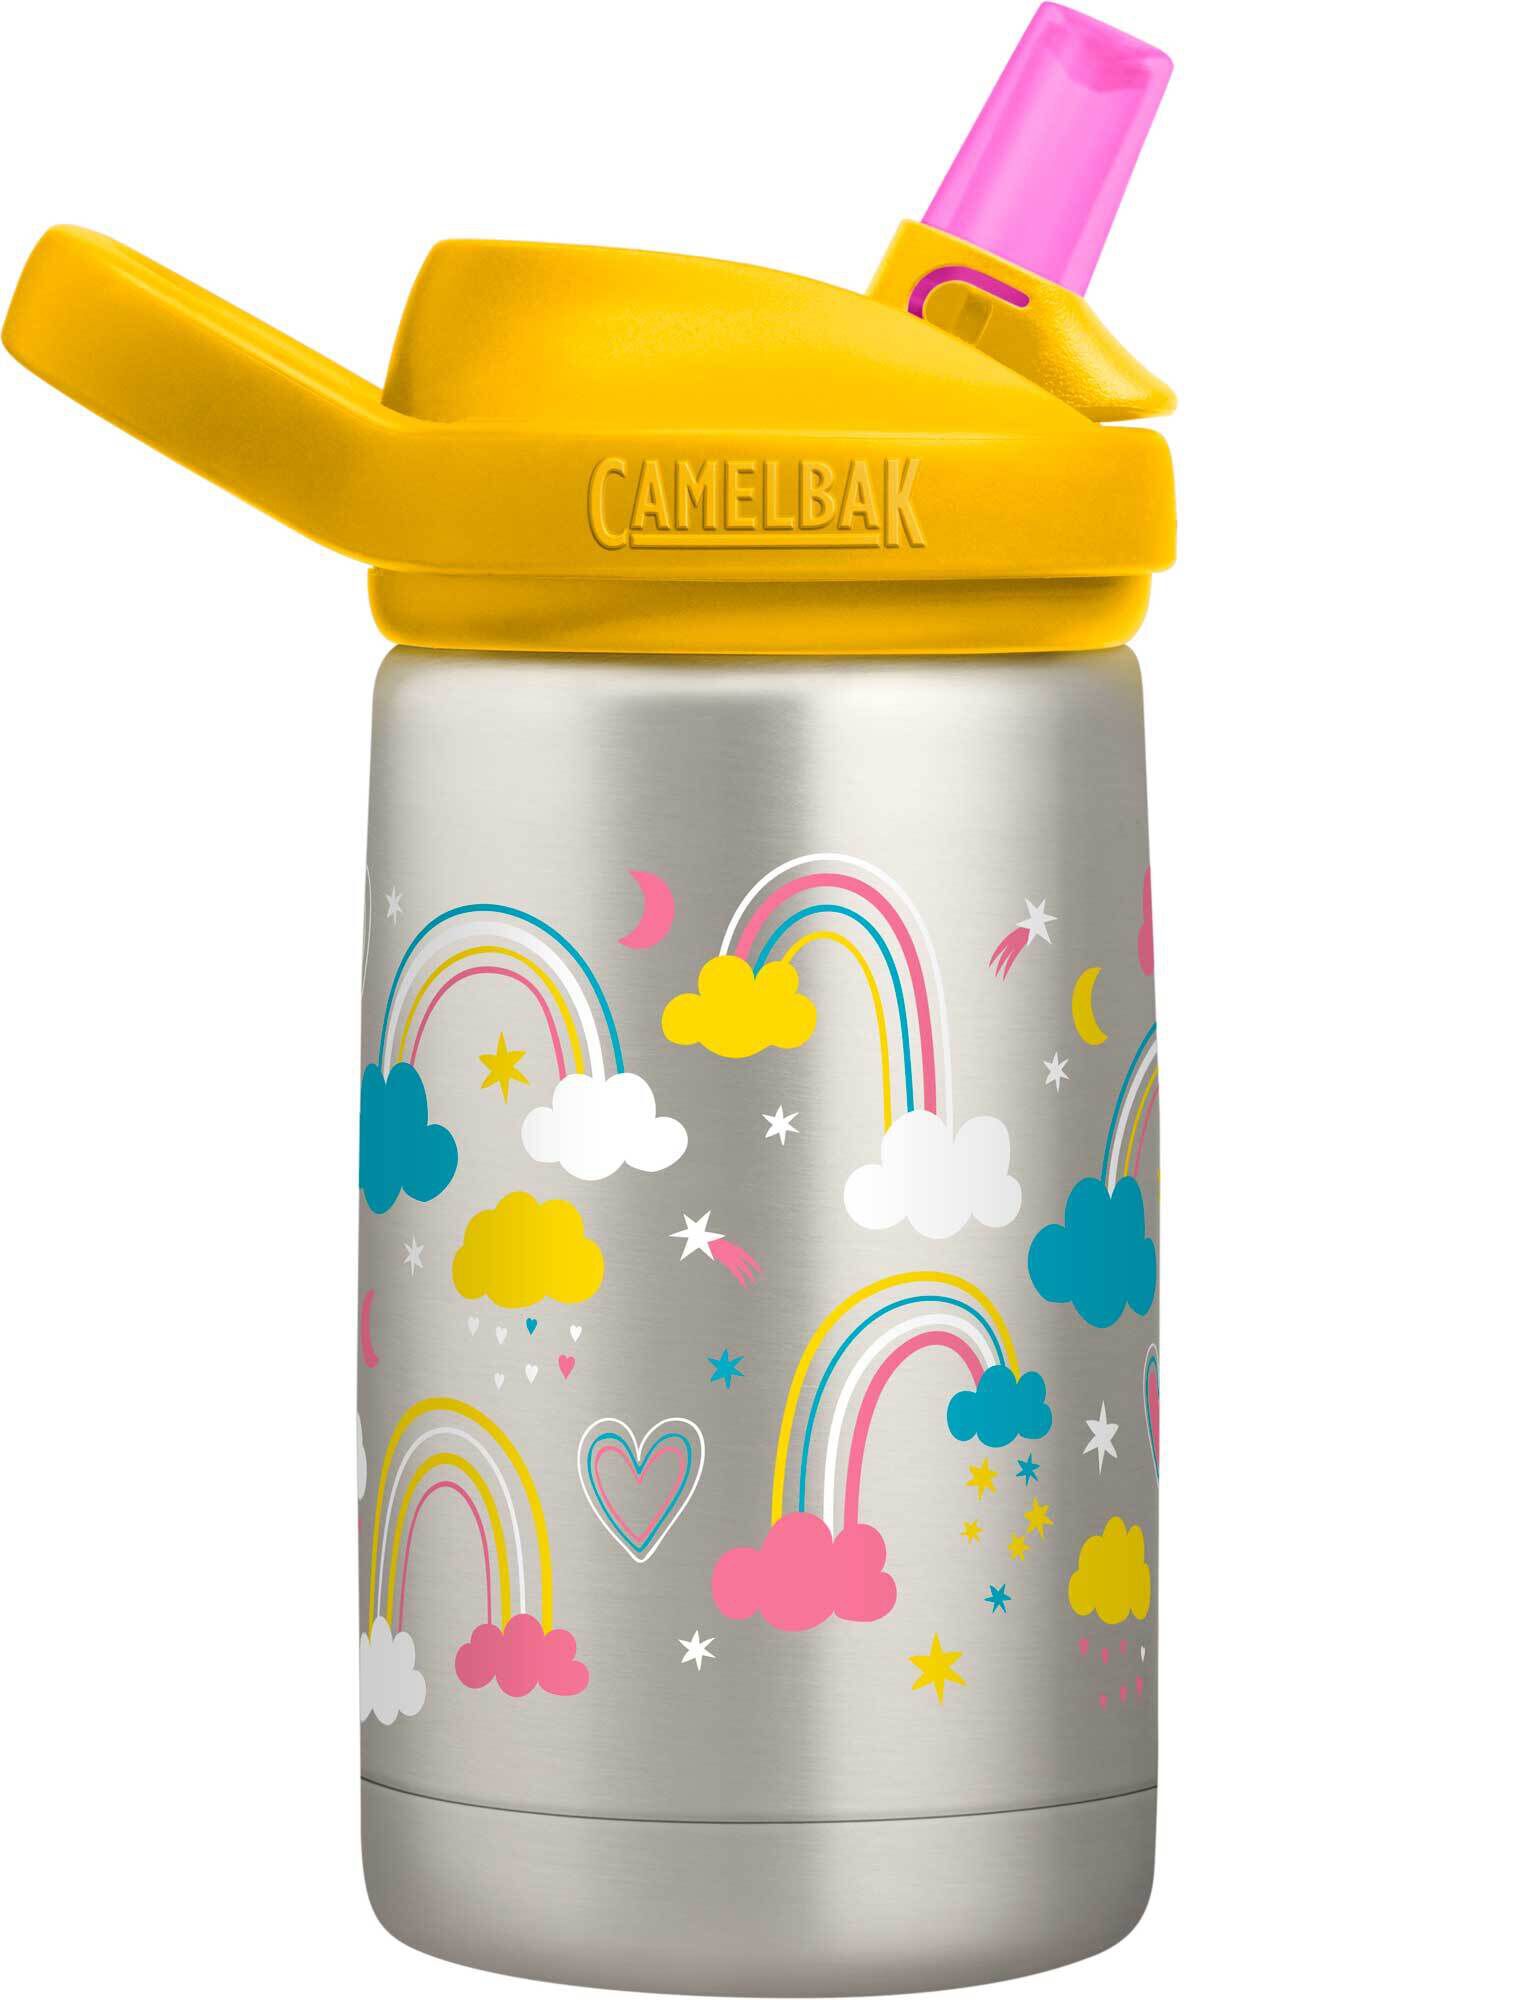 Camelbak Eddy Kids Anti-Spill Water/Drinks Hydration Bottle LILAC 